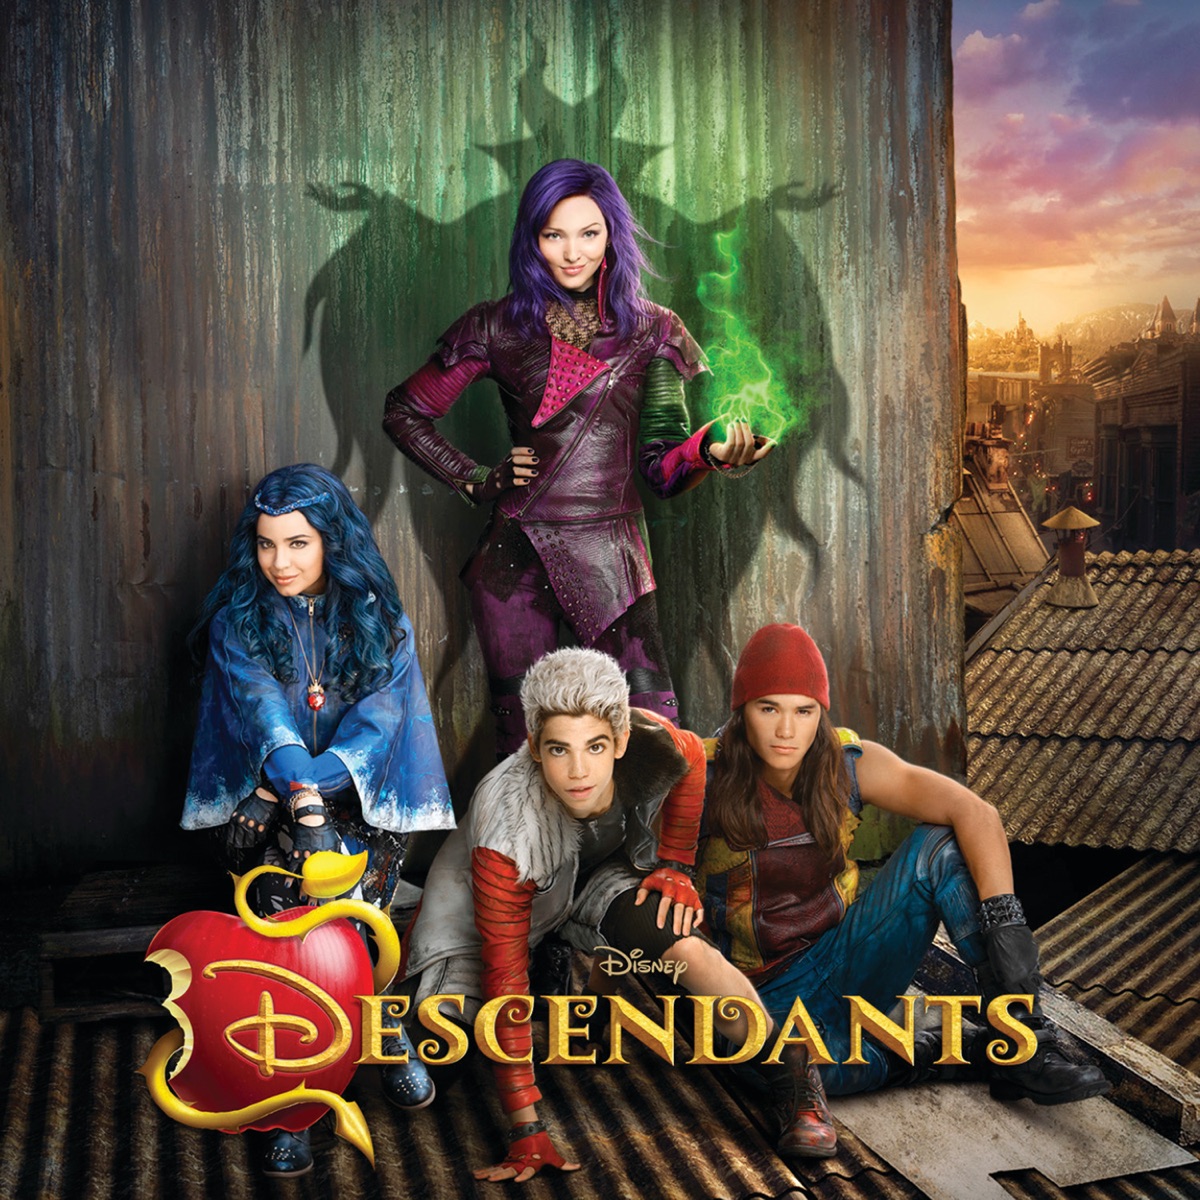 Descendants 3 - Disney Channel Movie - Where To Watch